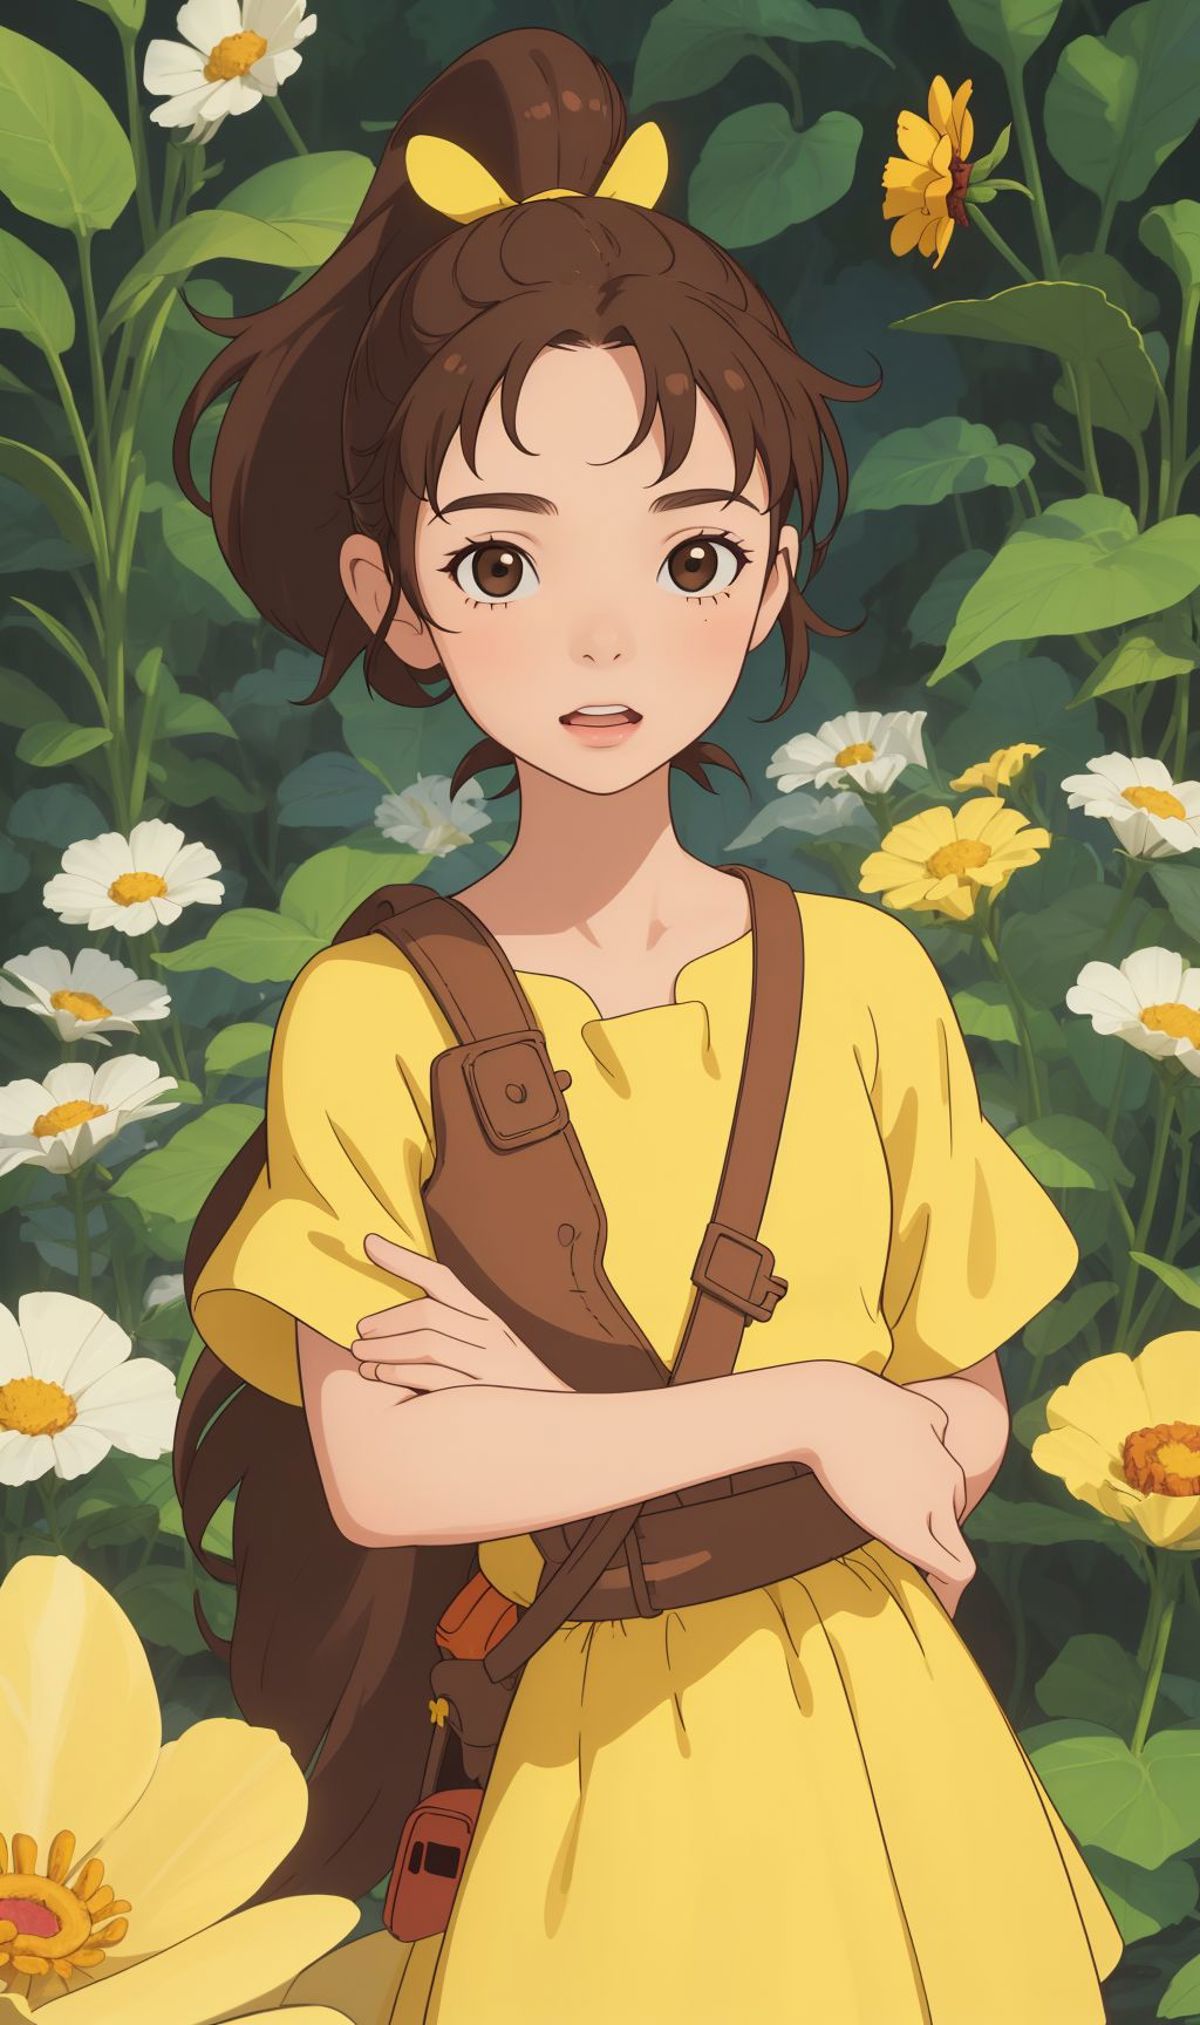 Arrietty (Studio Ghibli / The Secret World of Arrietty) image by ChaosOrchestrator